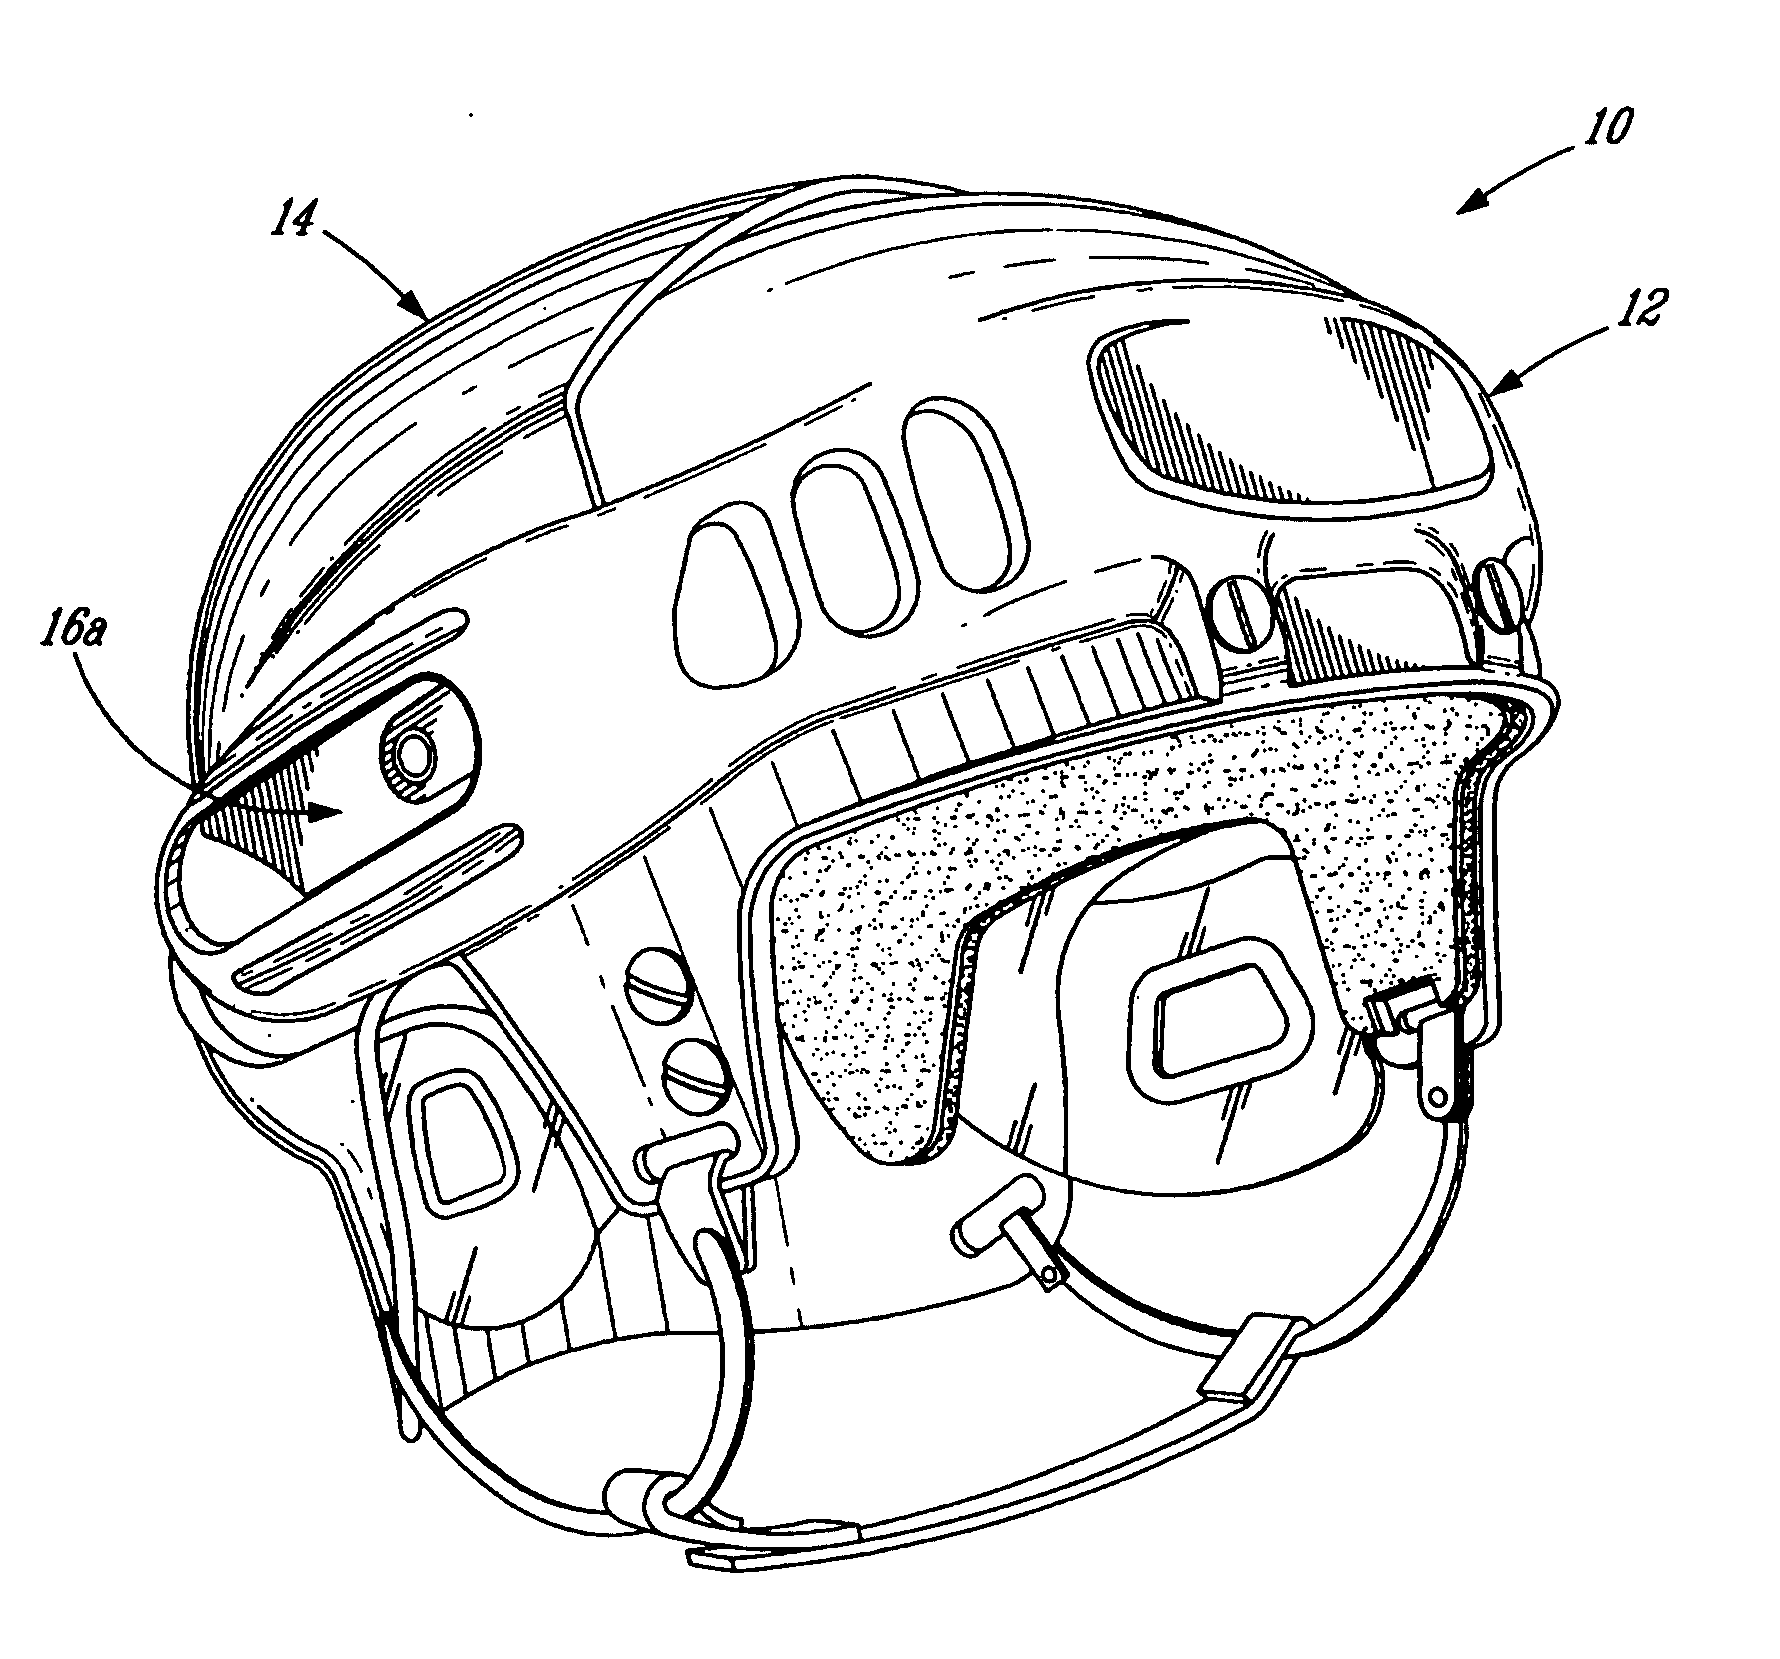 Adjustment mechanism for a helmet